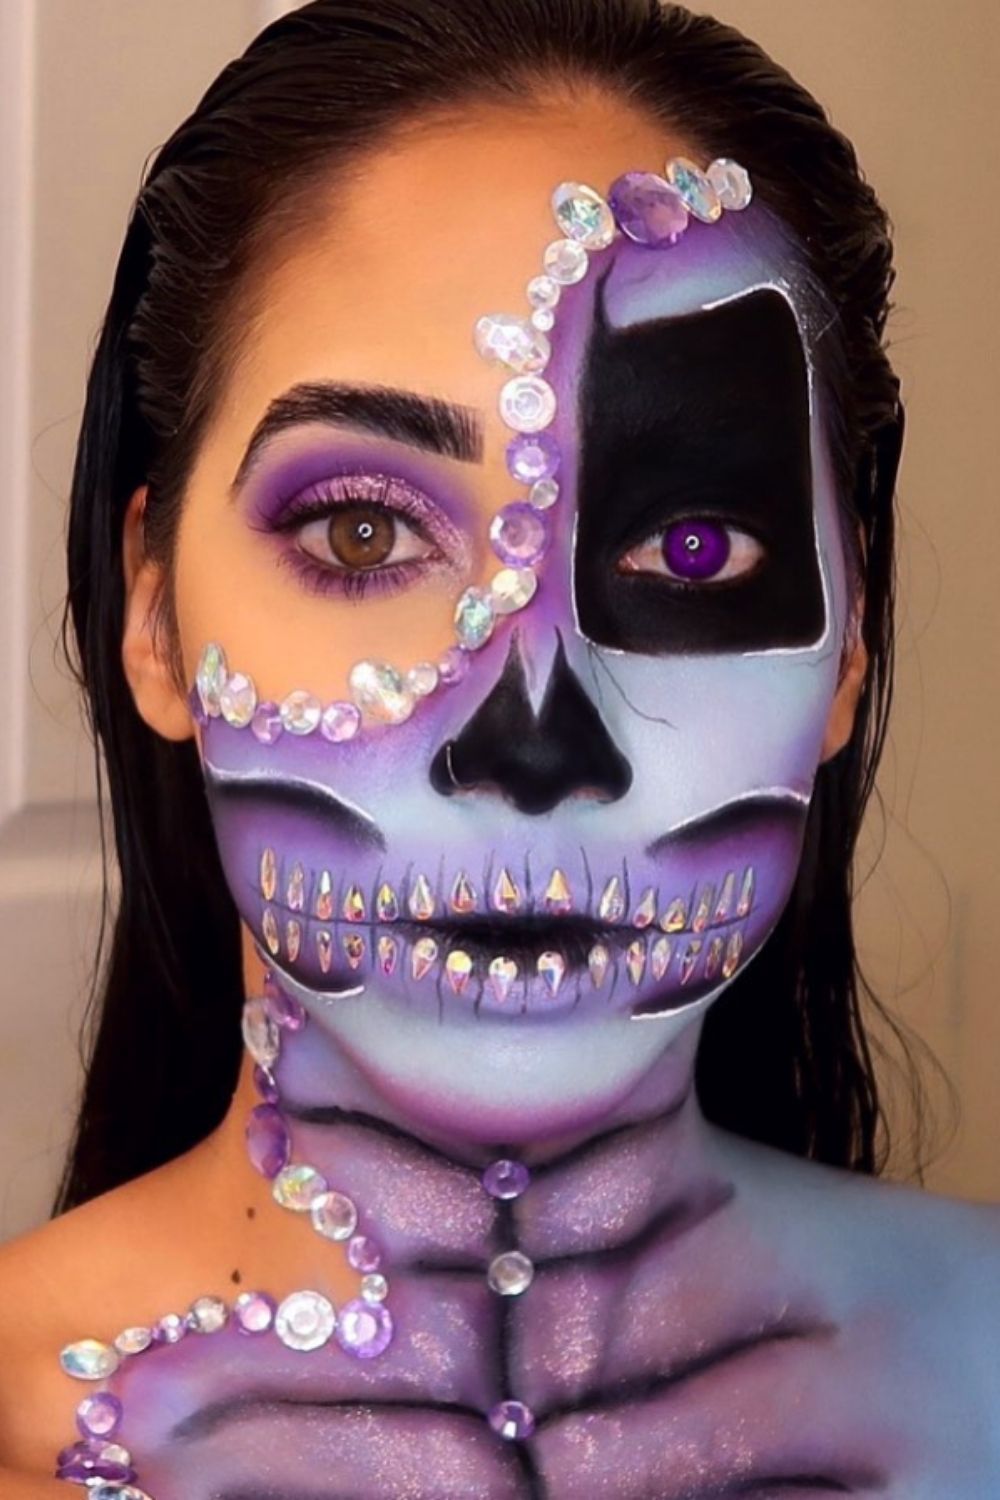 Skull makeup art with diamonds